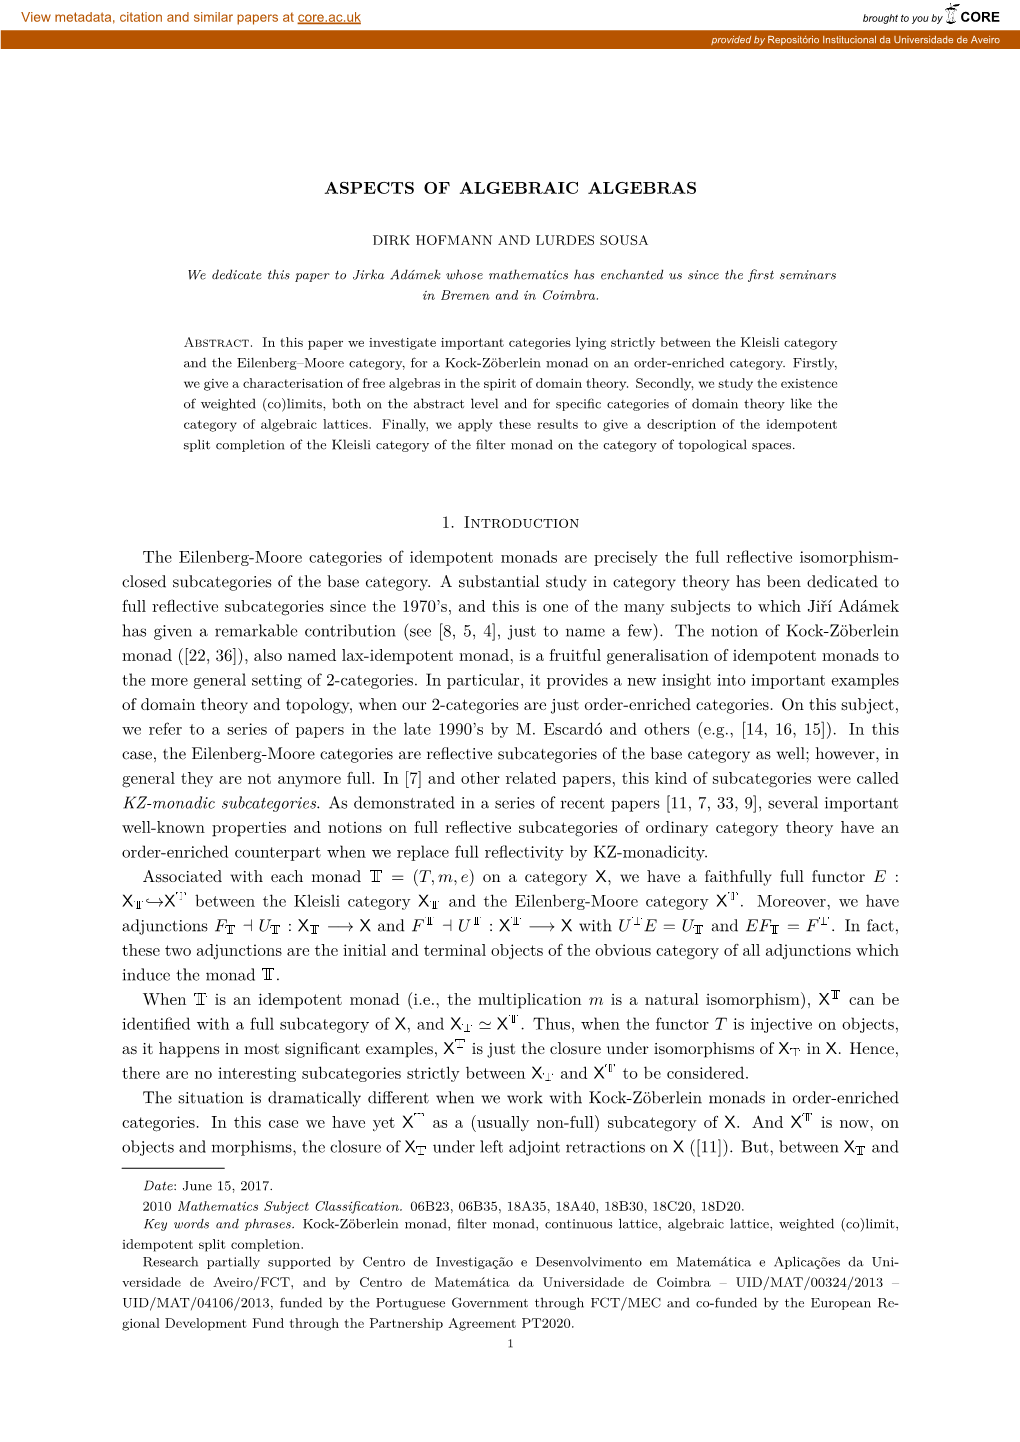 ASPECTS of ALGEBRAIC ALGEBRAS 1. Introduction The